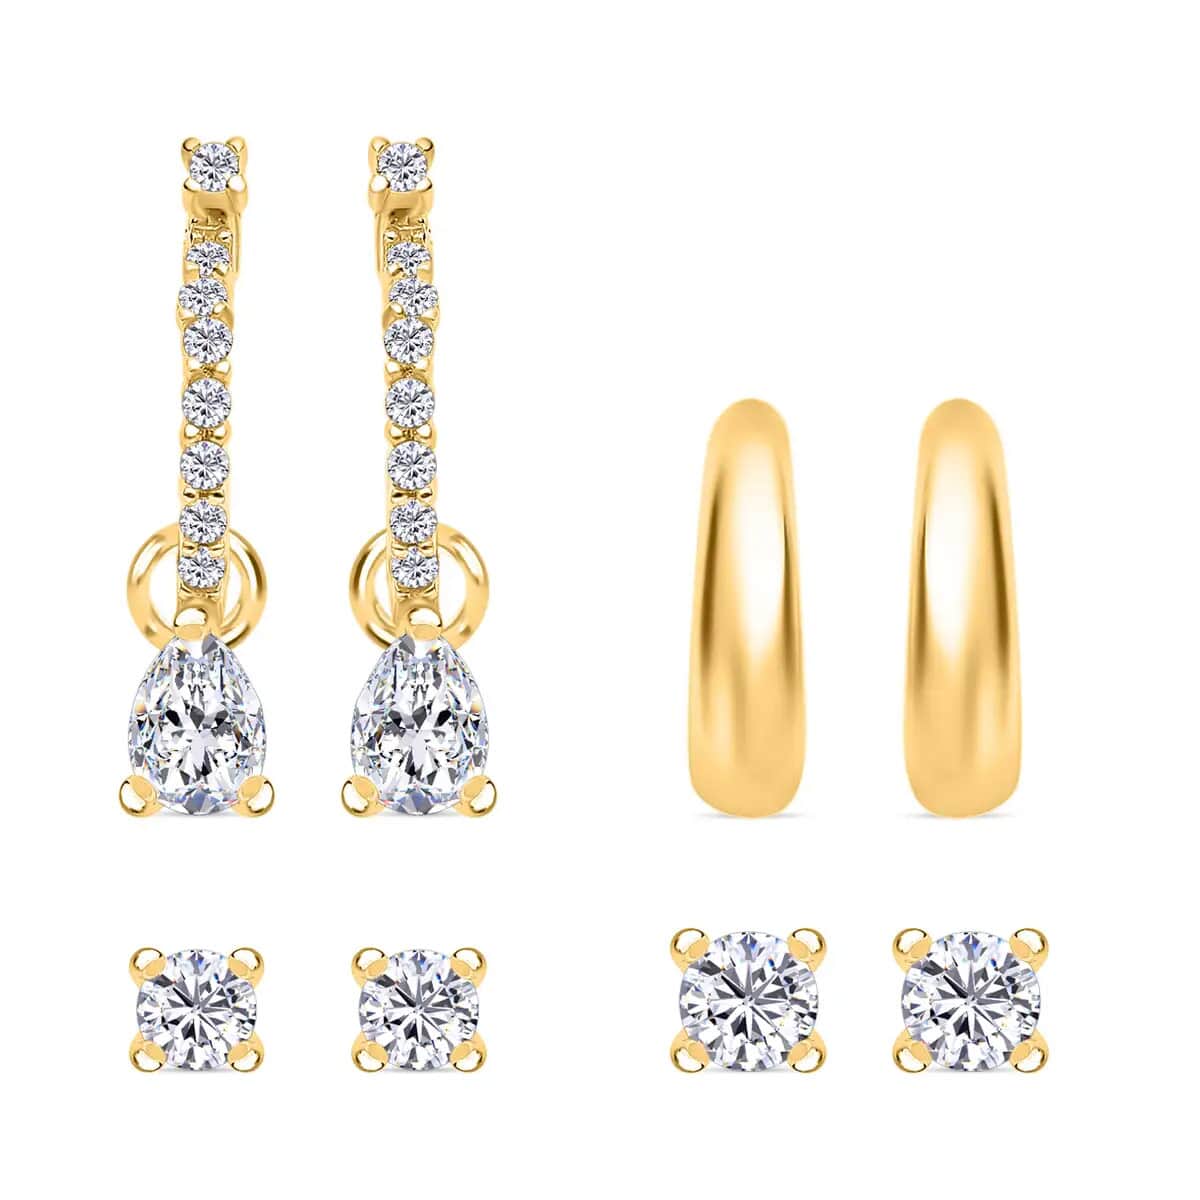 Set of 4 Simulated Diamond Earrings, Huggie Hoop Earrings with Tear Drop Interchangeable Charms, Plain Ear Cuffs, Stud Earrings For Women in 14K YG Over Sterling Silver 2.85 ctw image number 0